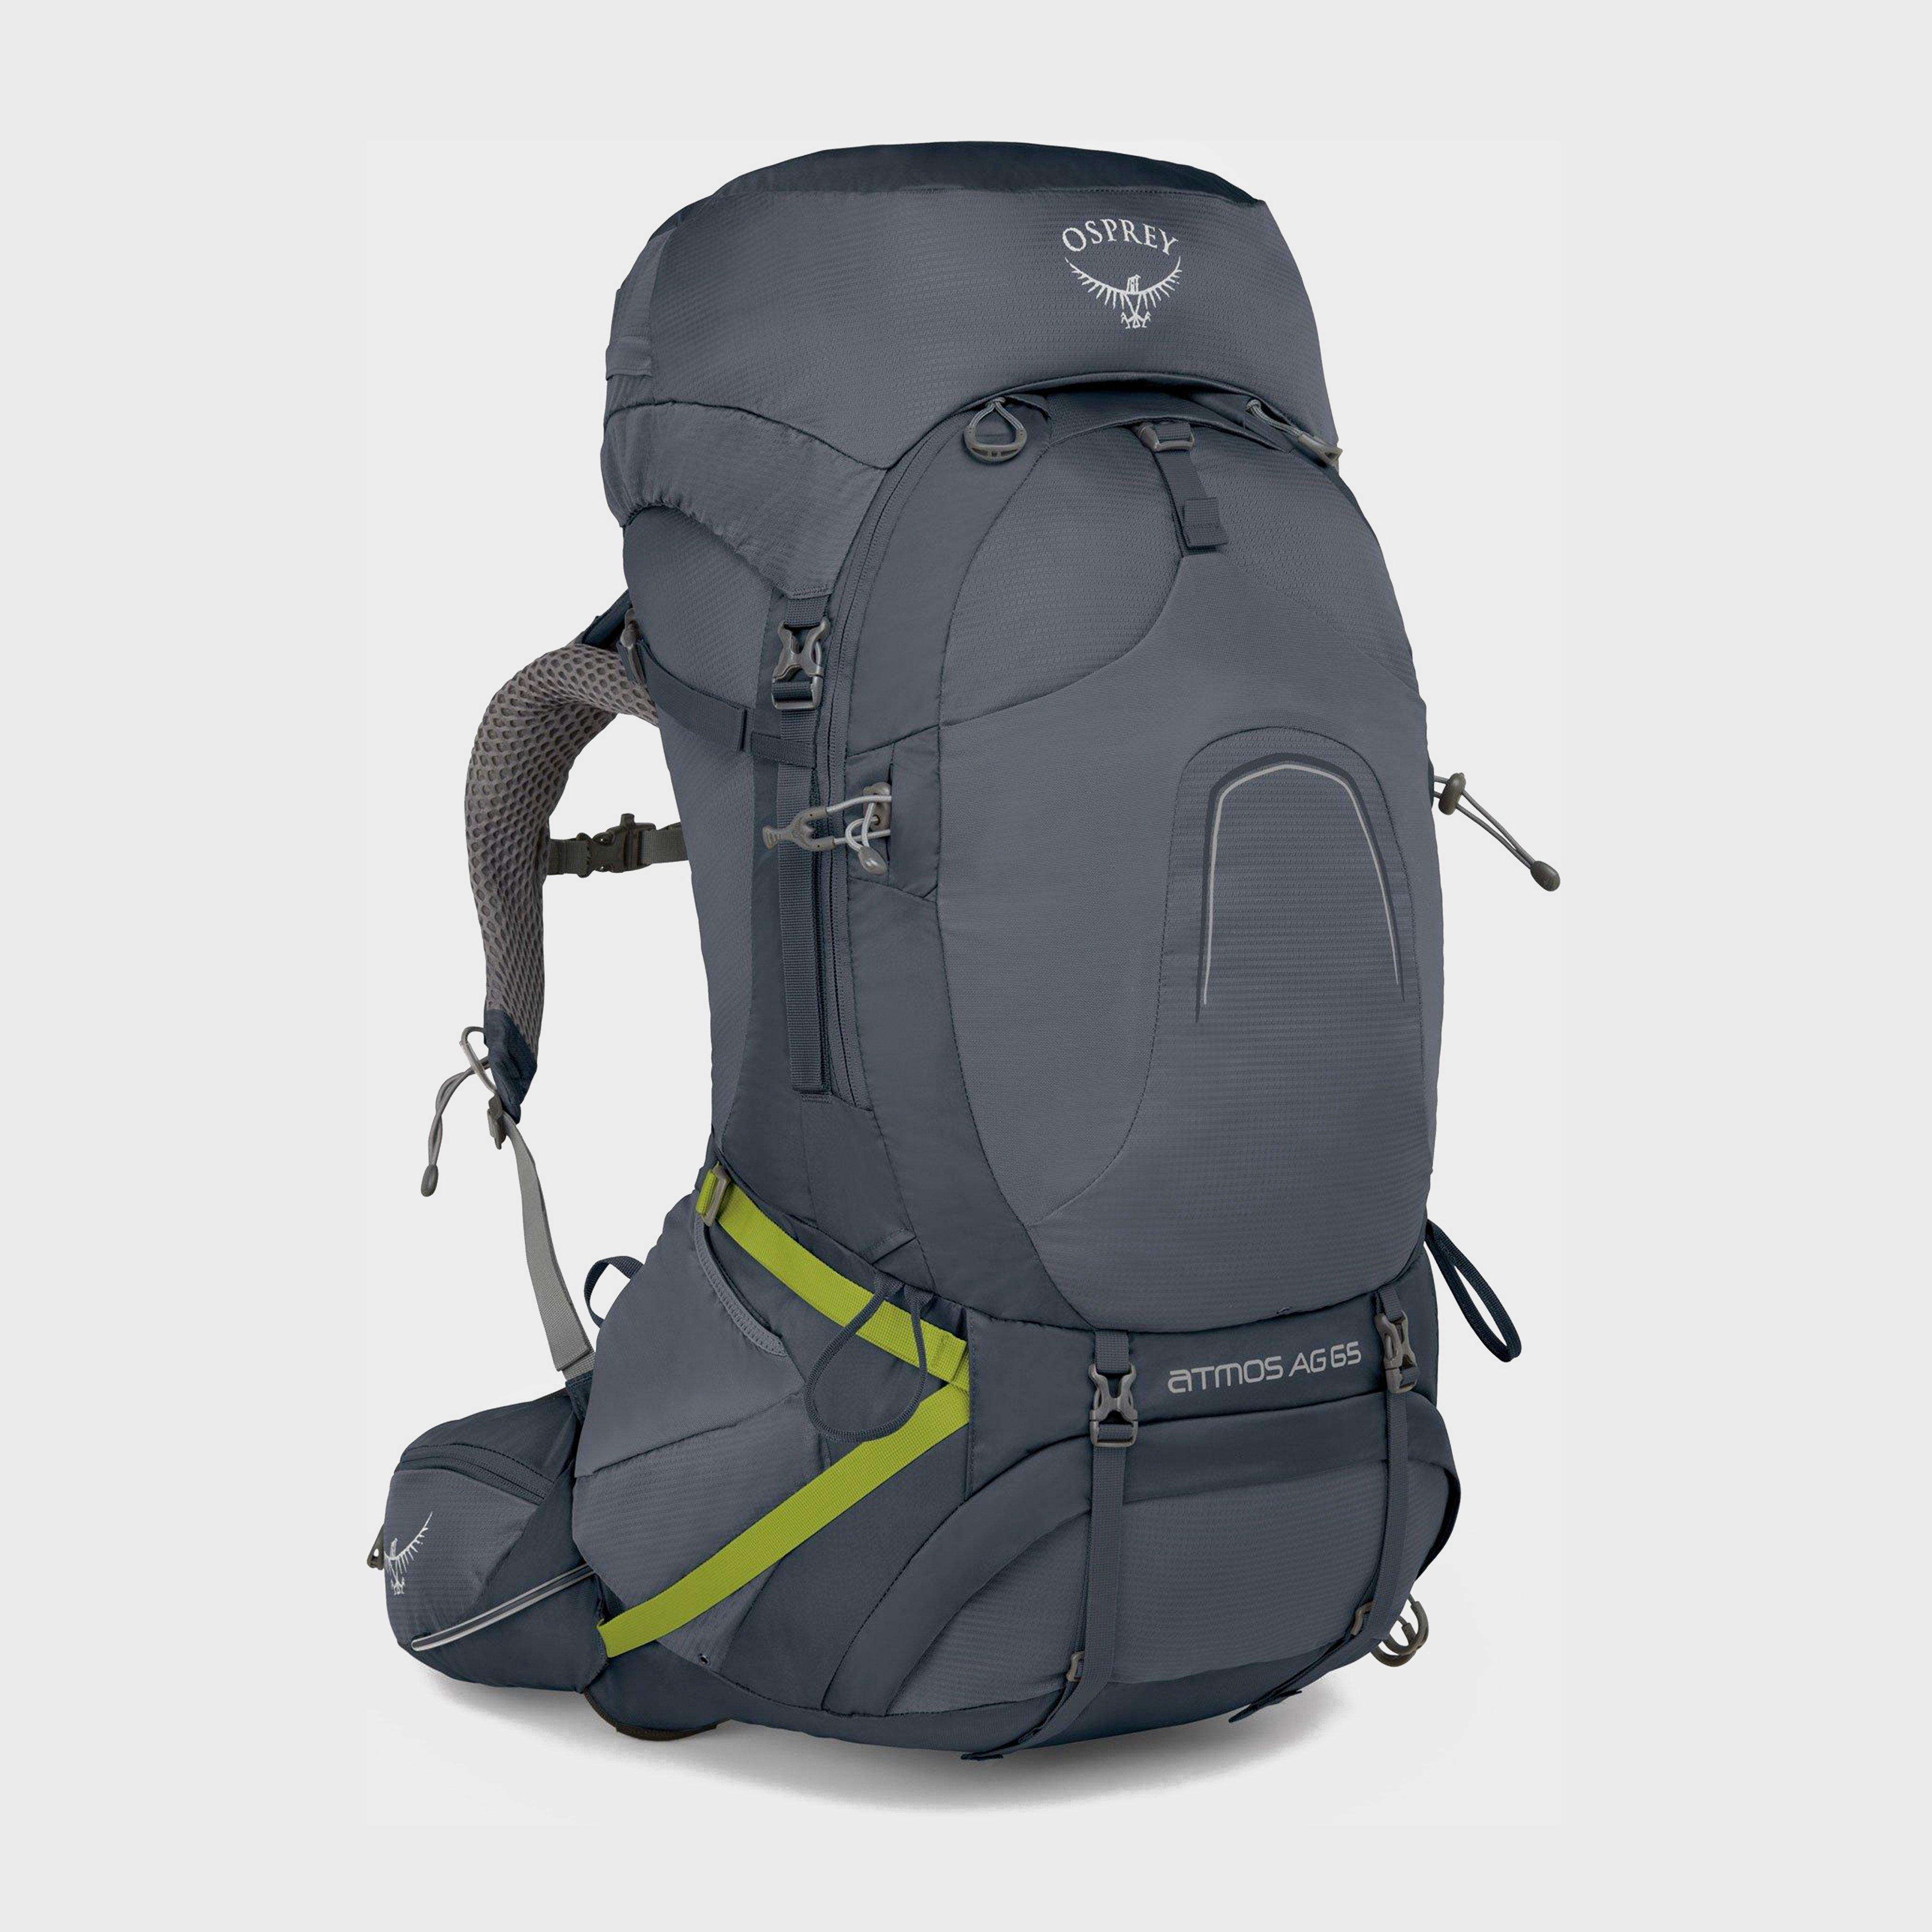 Vango Sherpa 65L Backpack Review